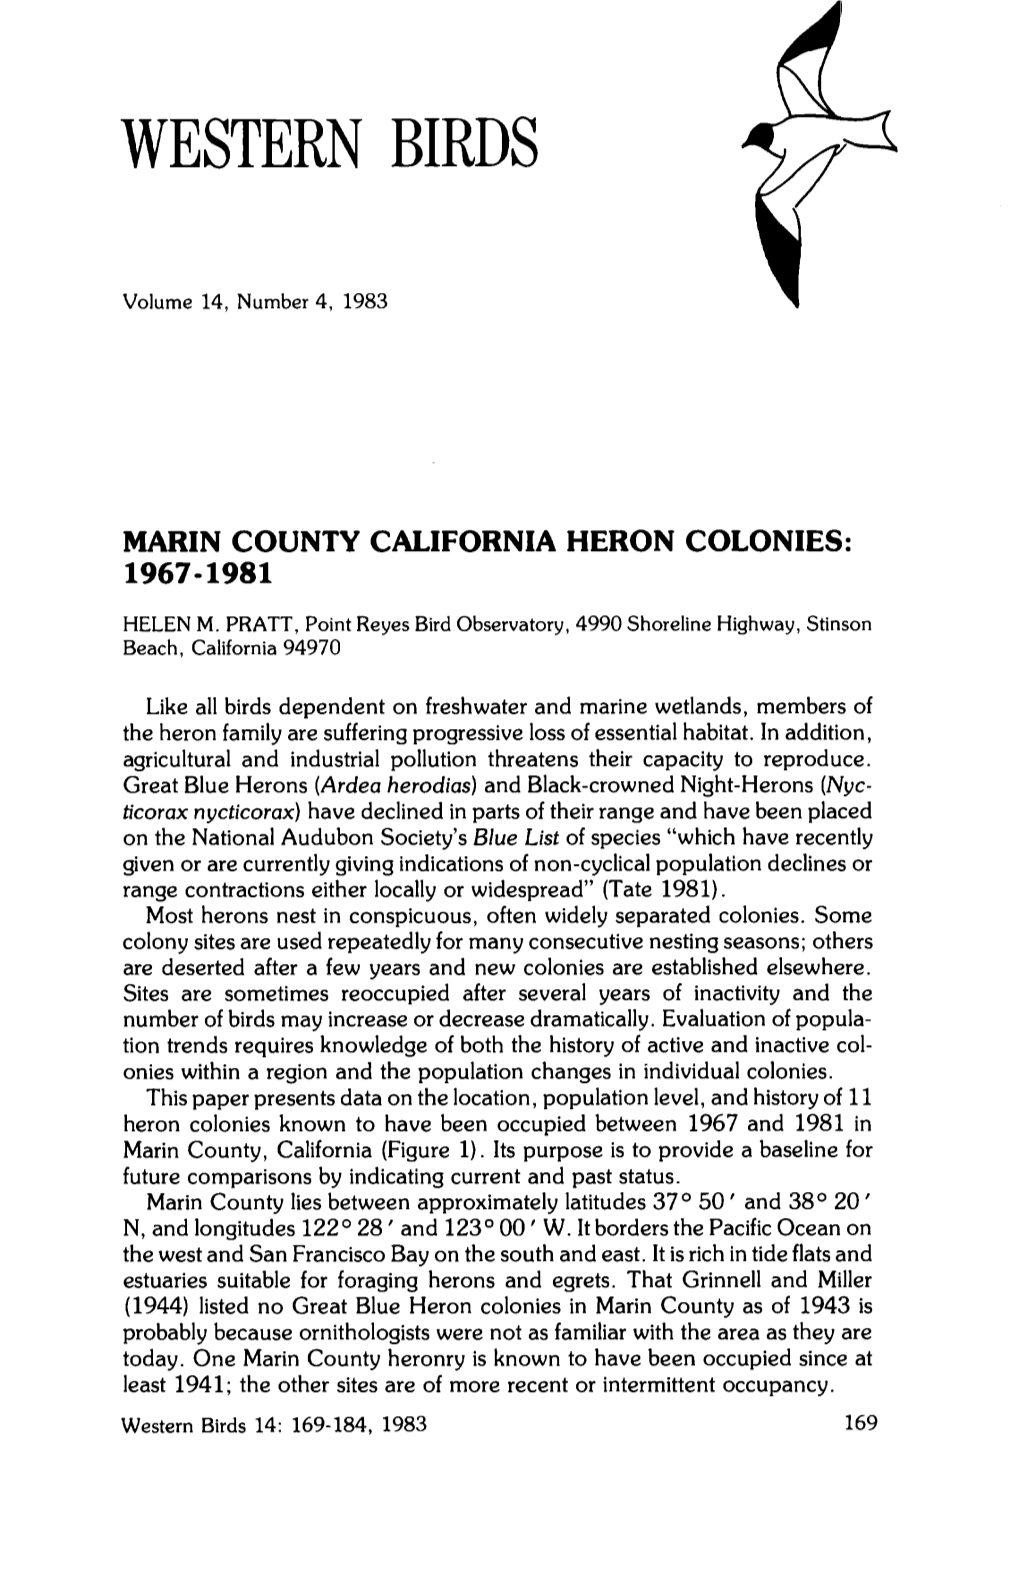 Marin County California Heron Colonies: 1967-1981